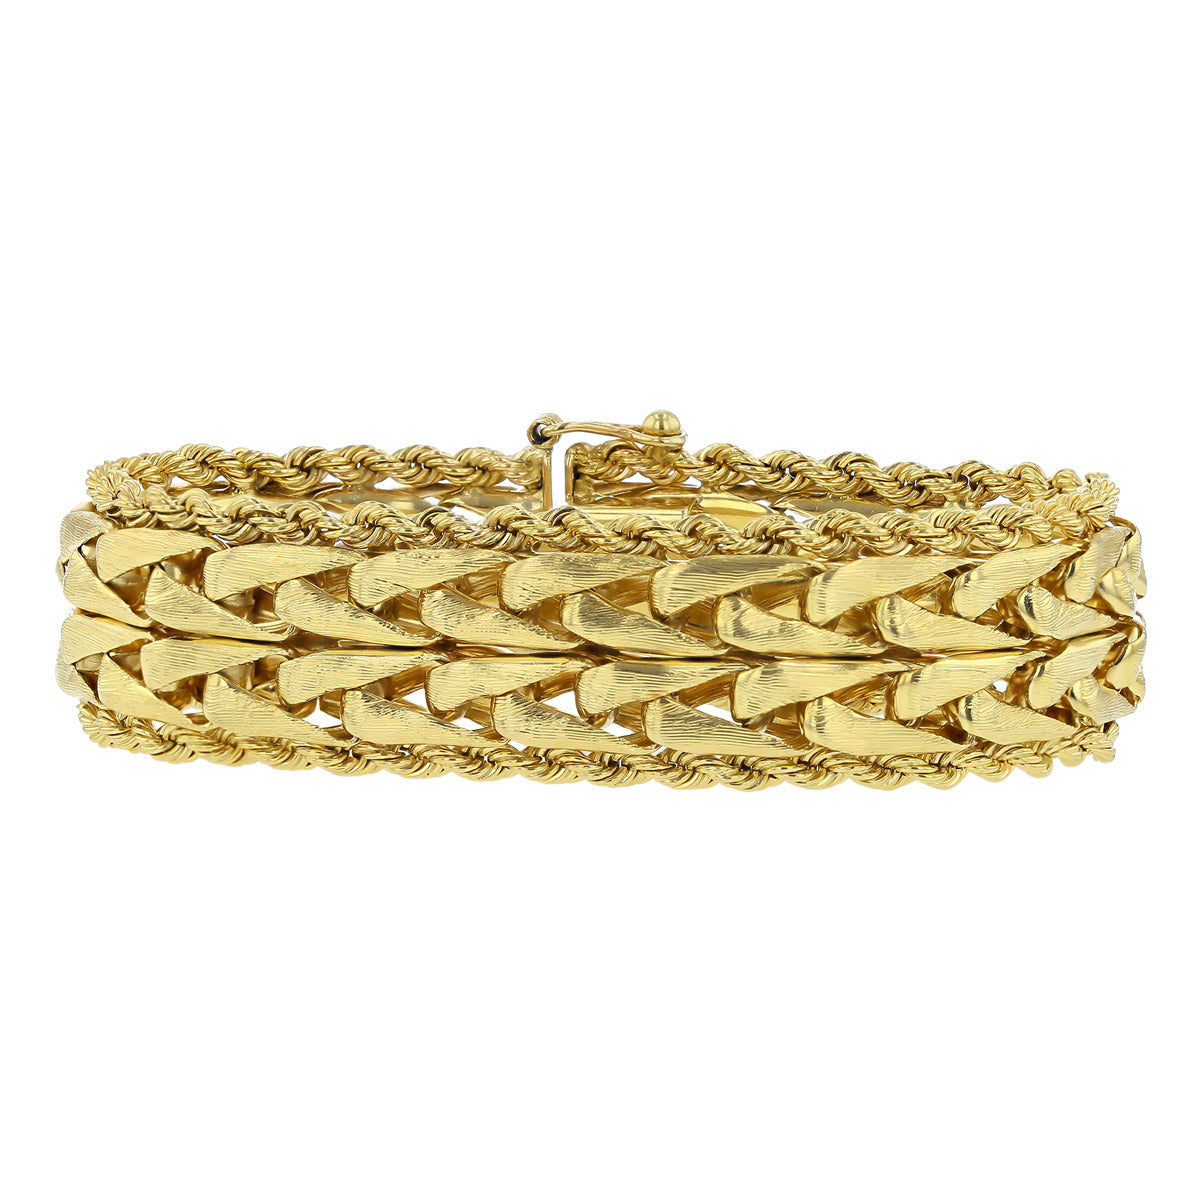 twist bracelet yellow gold